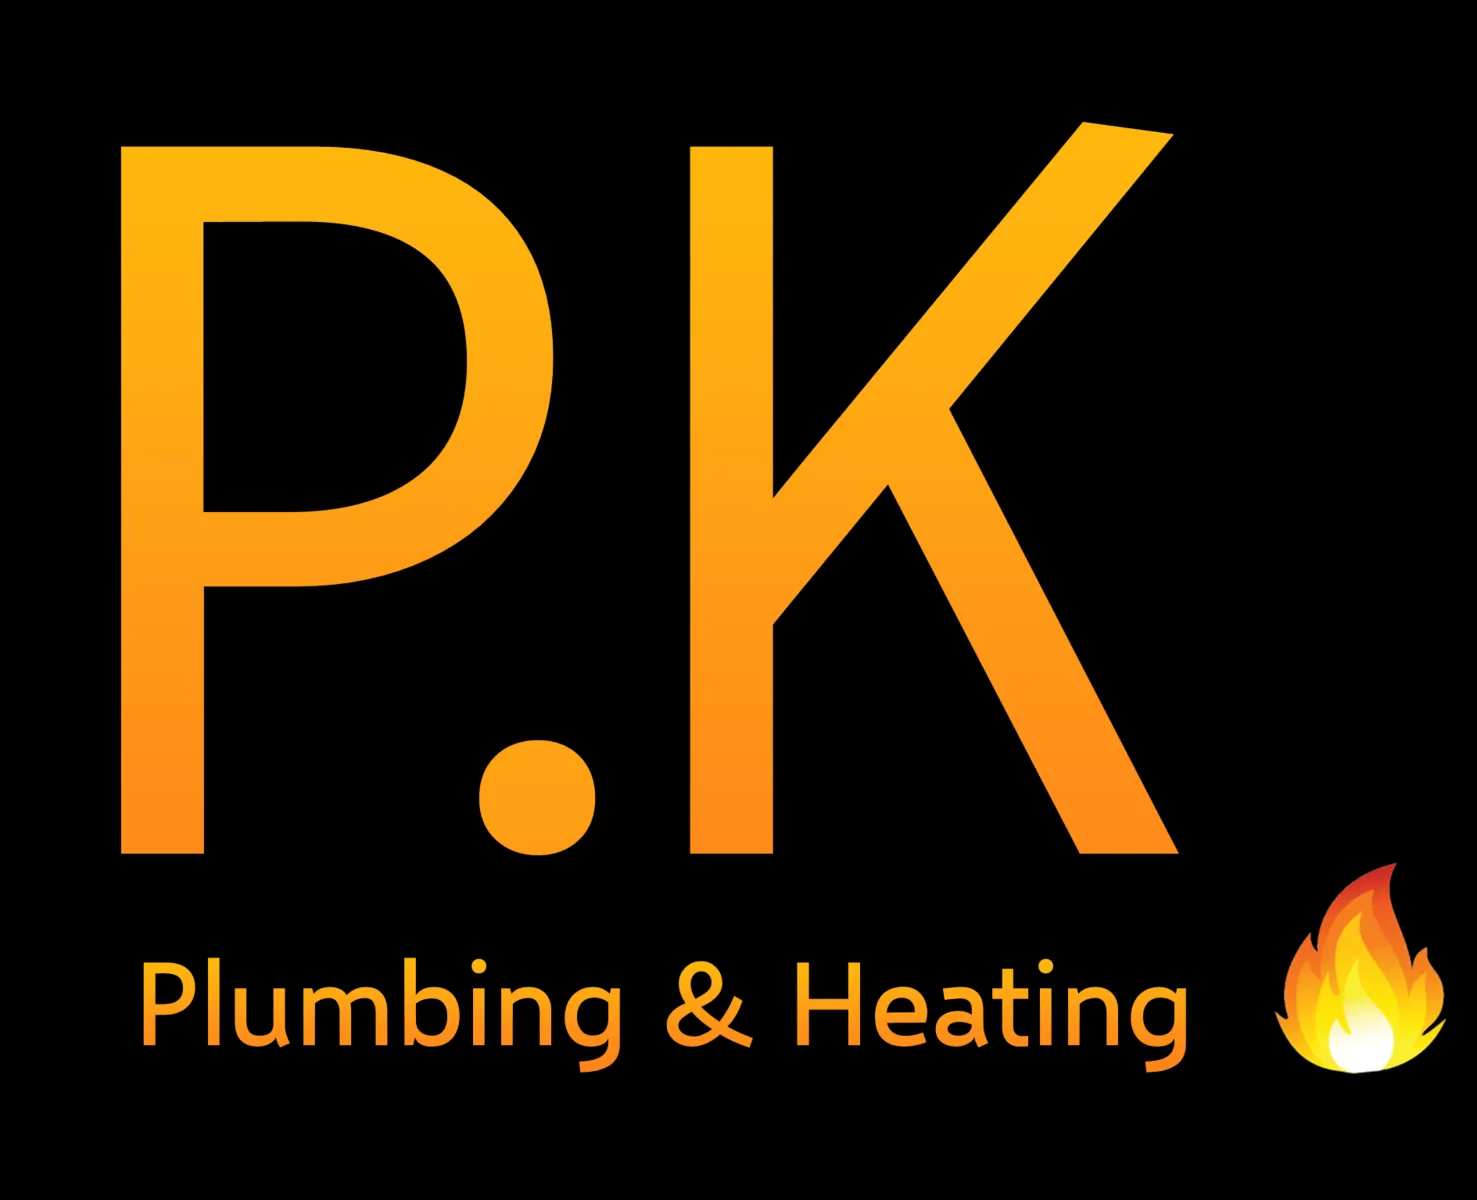 P.K Plumbing & Heating